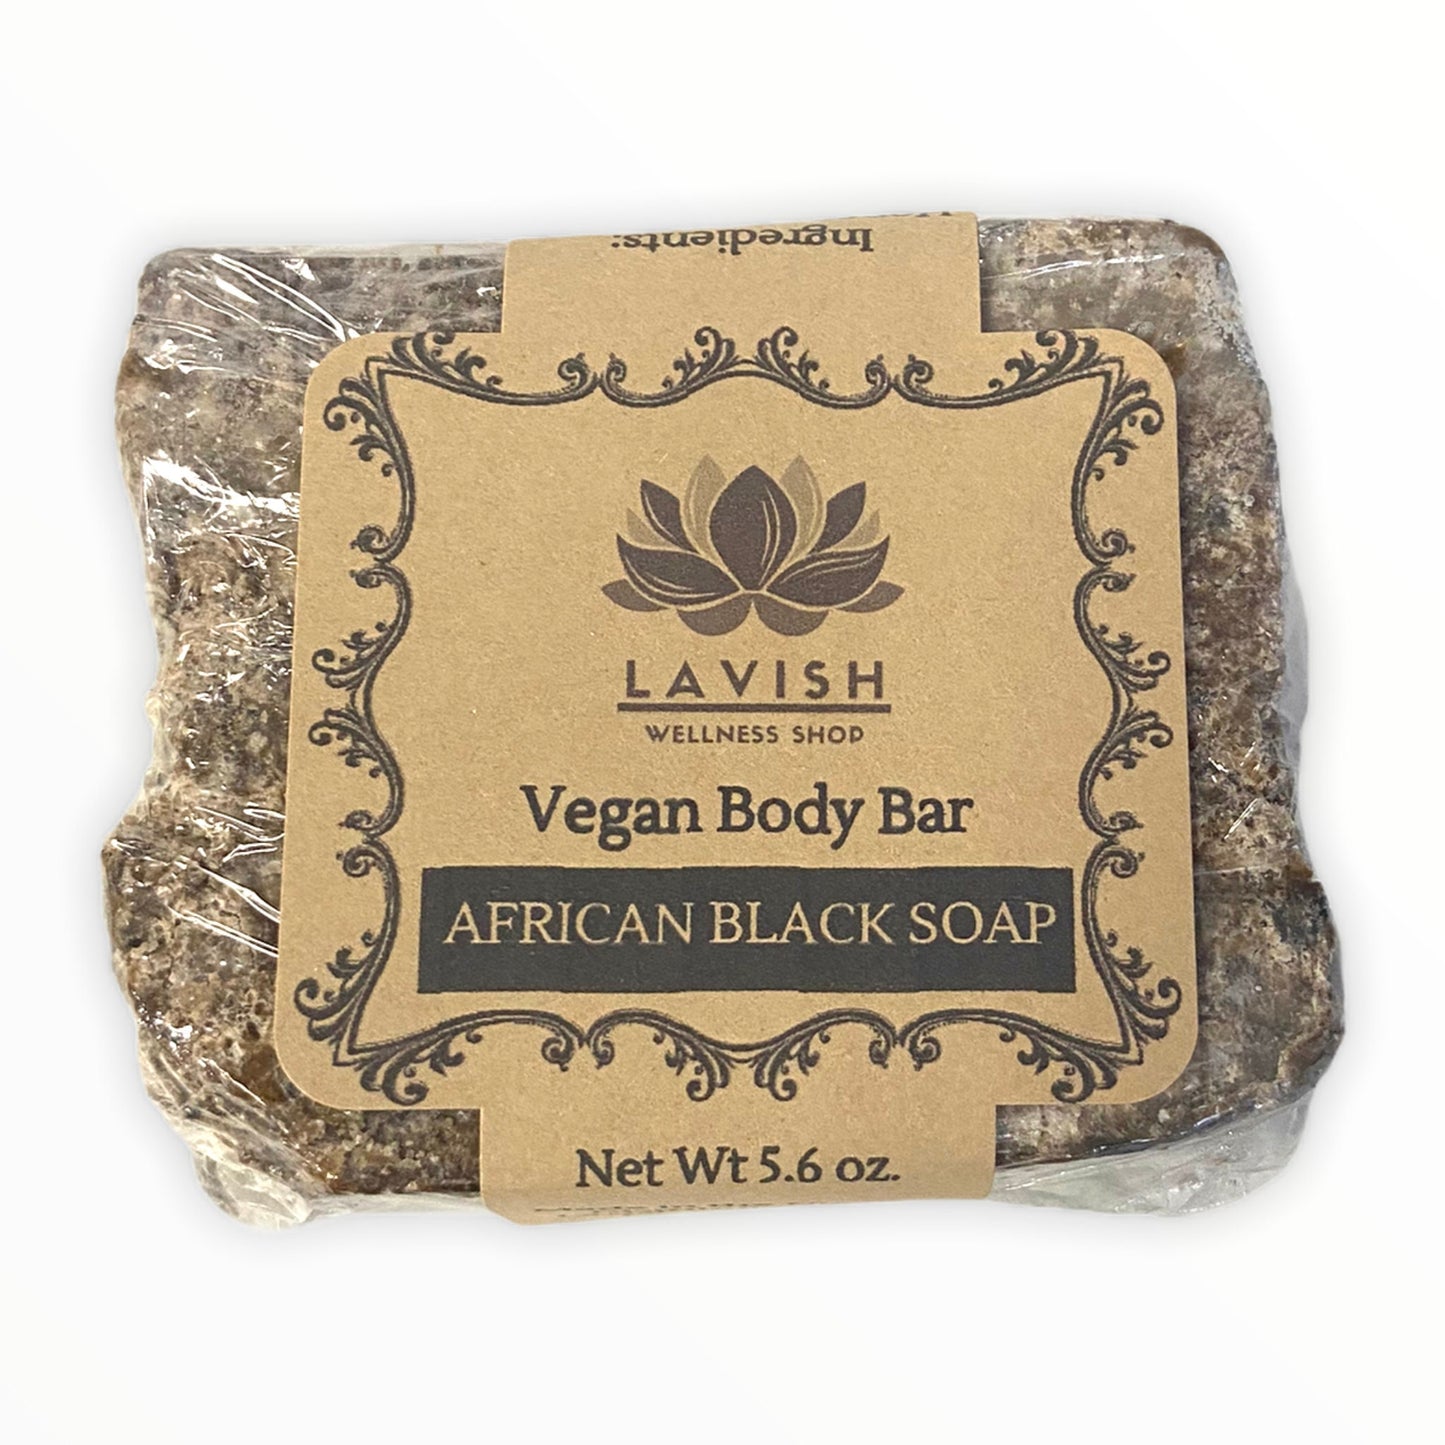 African Black Soap Bar 5.6 oz.